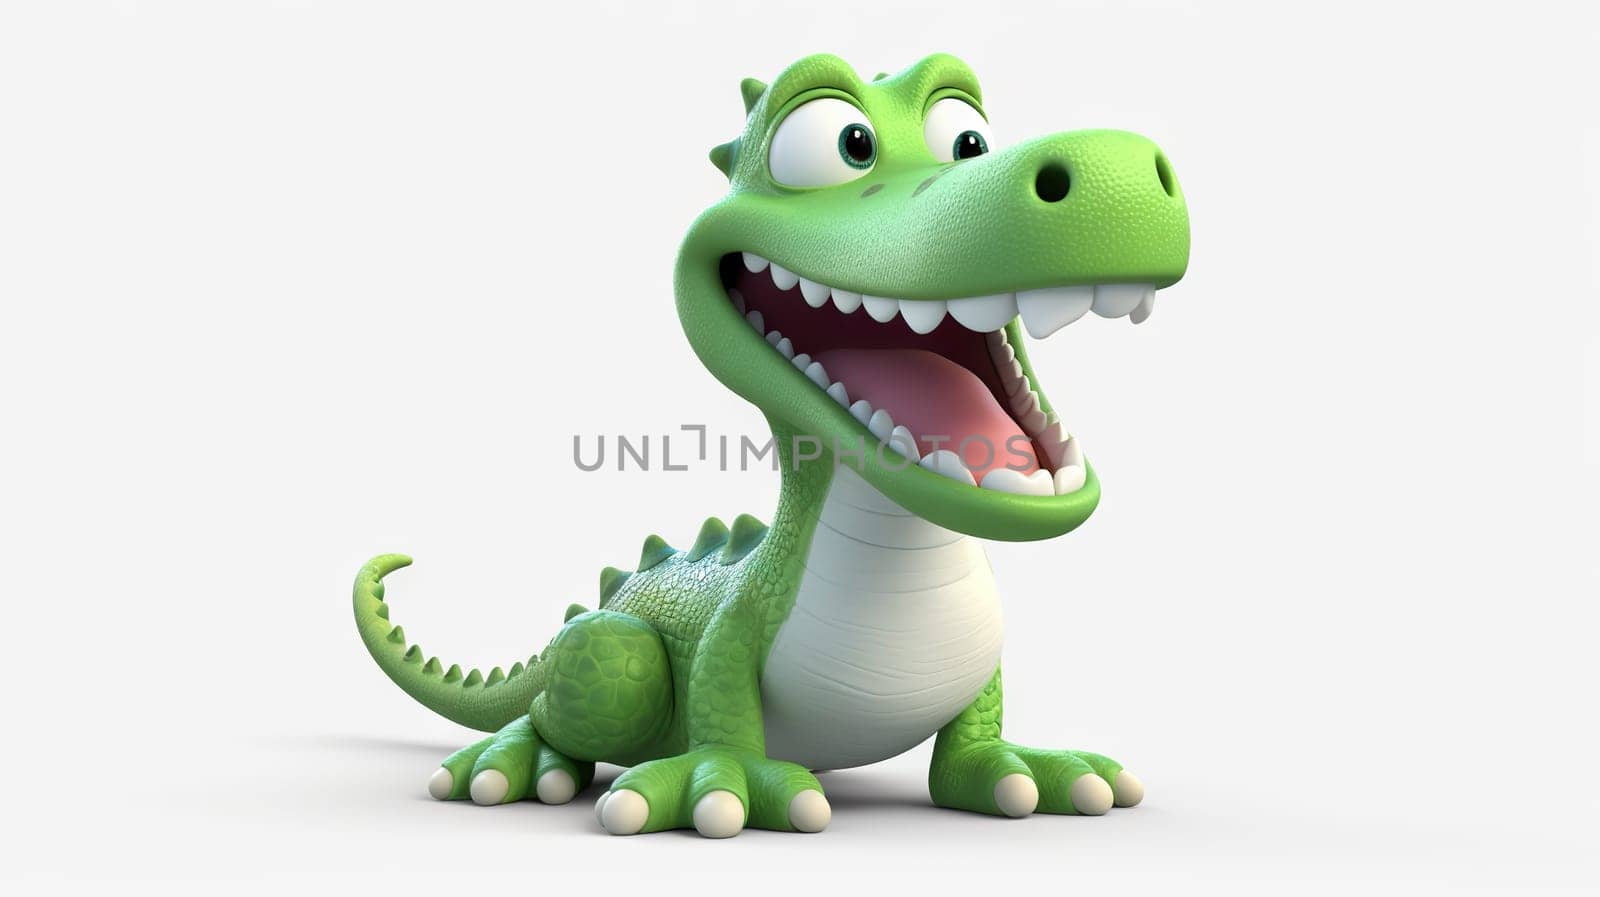 Vibrant illustration of a friendly cartoon crocodile, exuding joy and playfulness by chrisroll